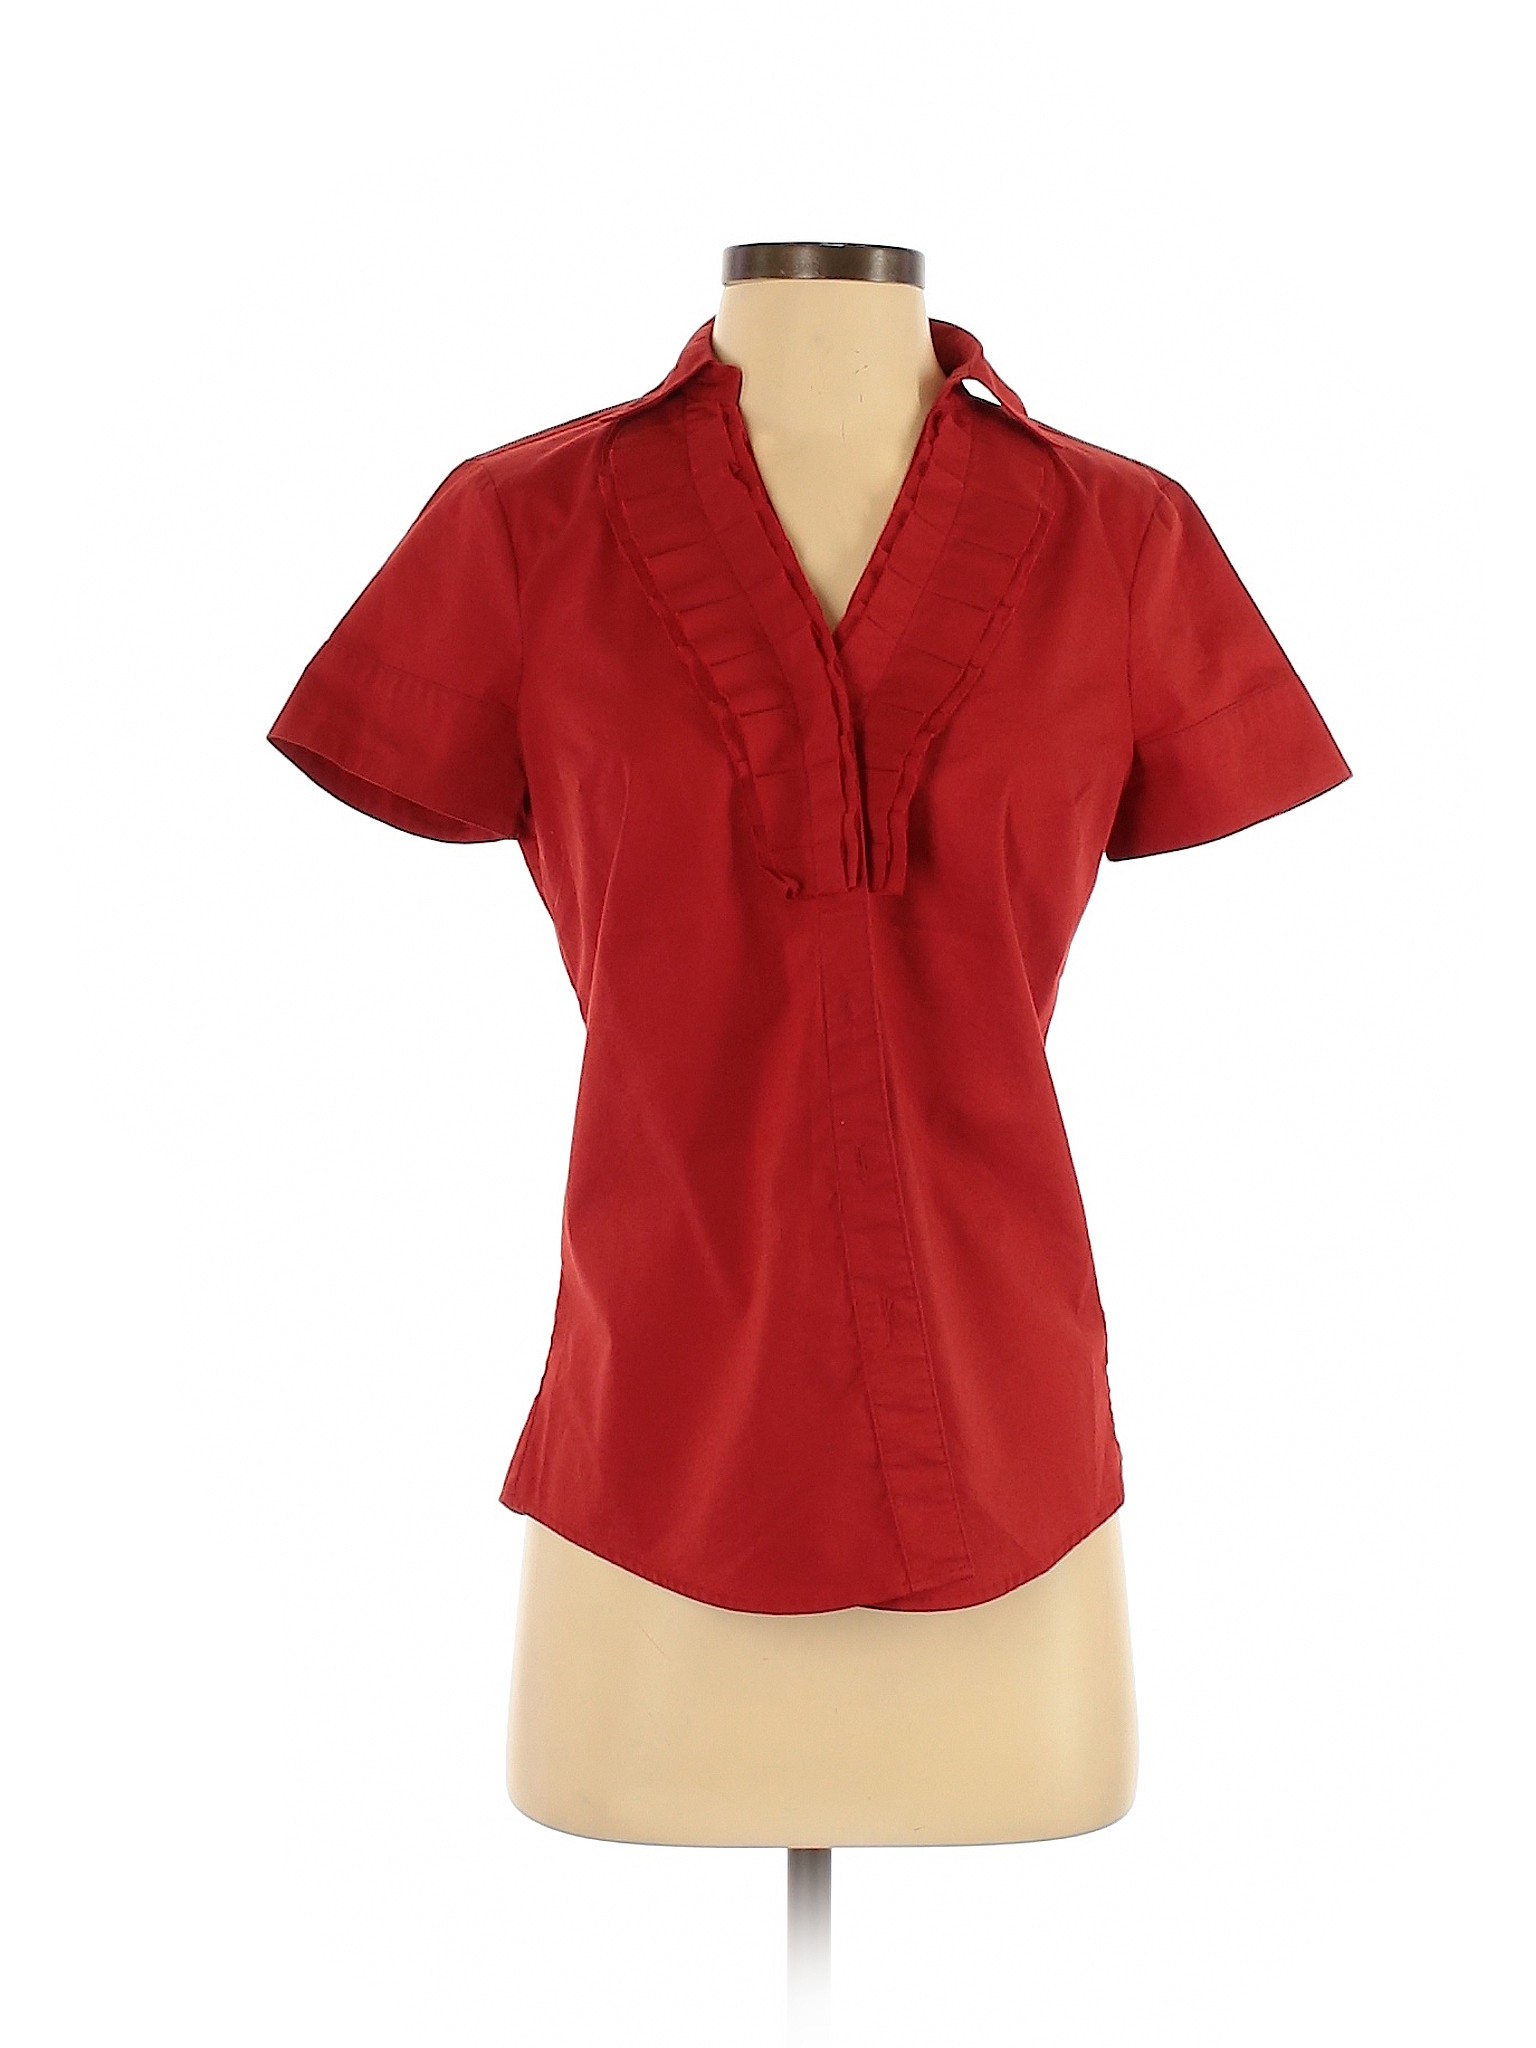 short sleeve red button down shirt